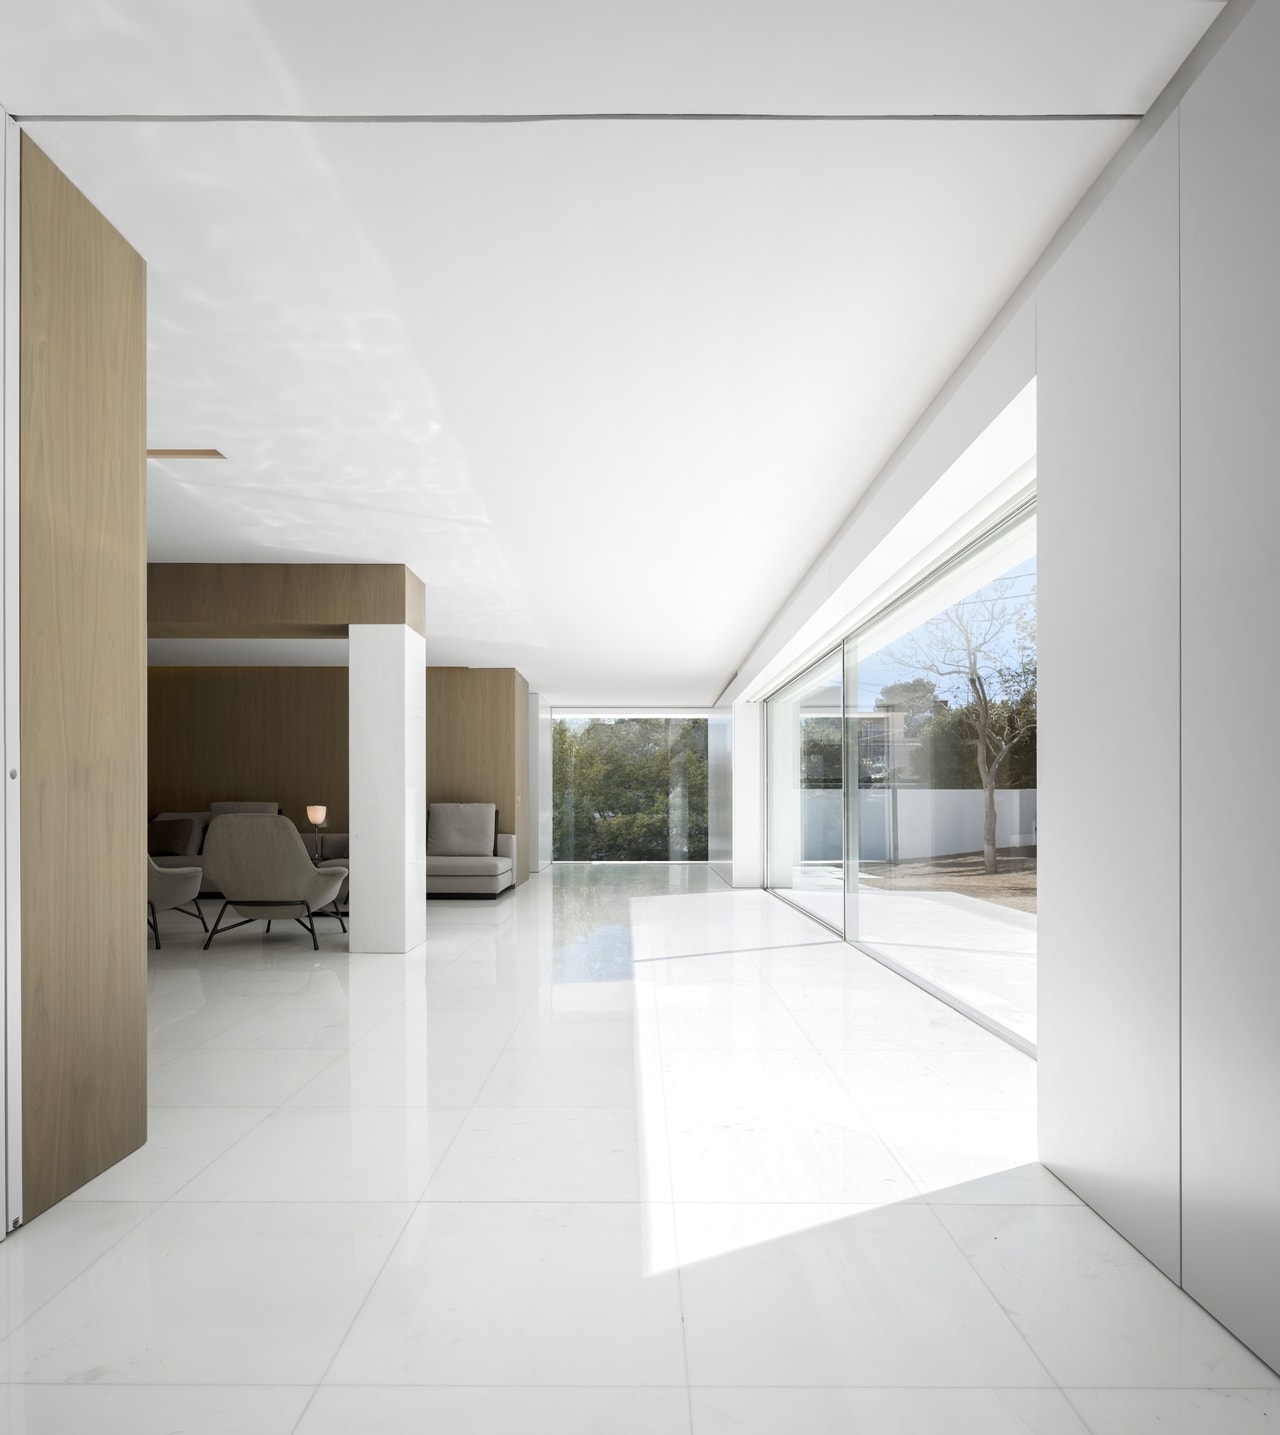 Clean minimalist interior design in minimalist house designed by Fran Silvestre Architects